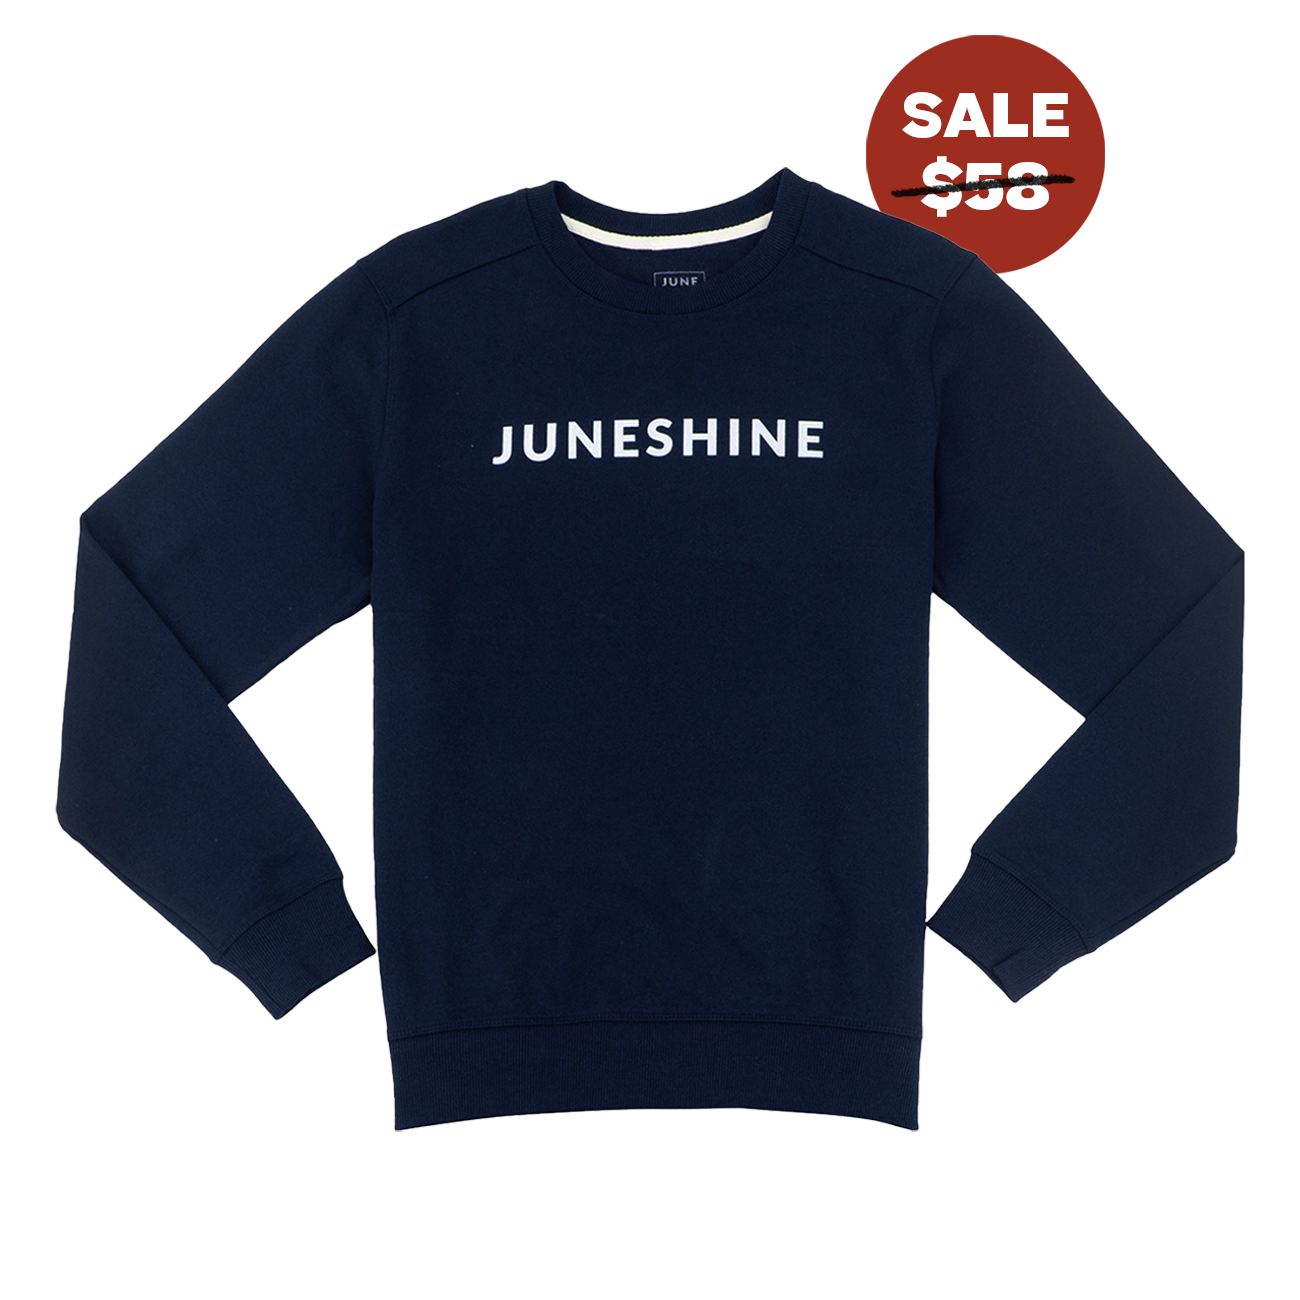 Blue  crewneck sweatshirt that reads "juneshine" in white letters